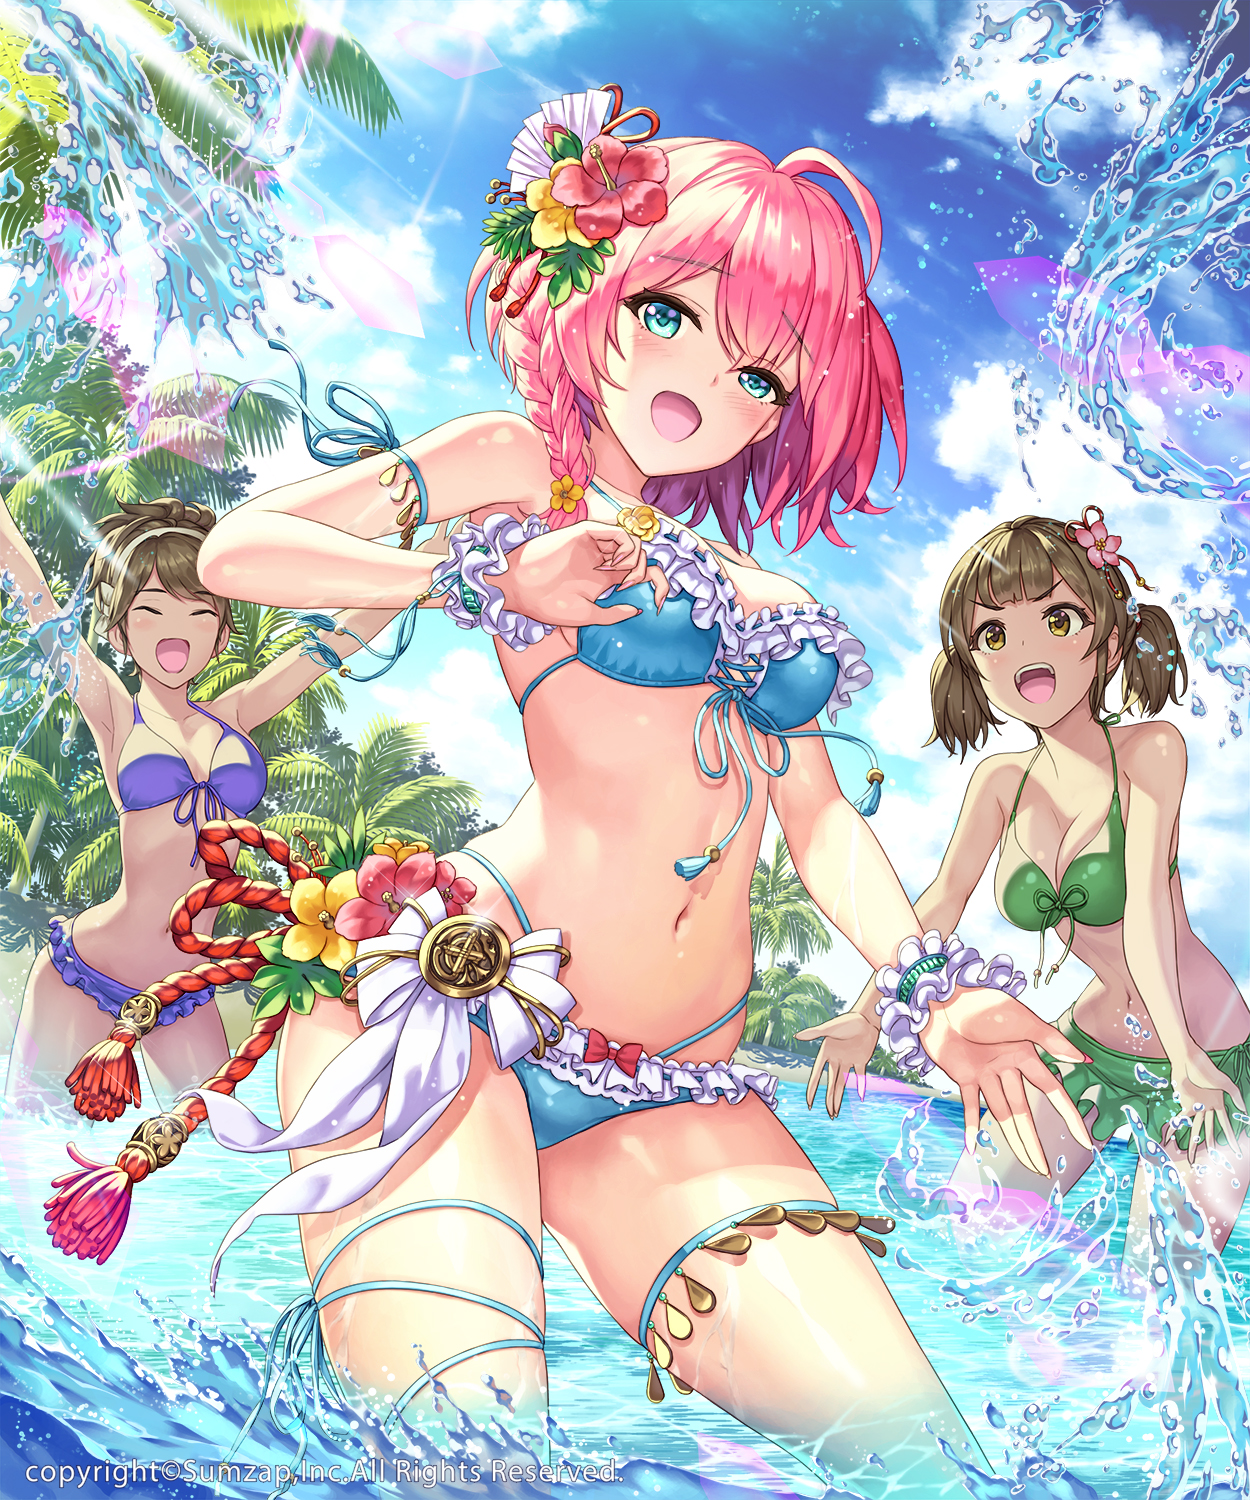 Anime 1250x1500 anime anime girls digital art artwork portrait display 2D Hamahama water bikini brunette pink hair women trio flowers palm trees hibiscus water drops open mouth